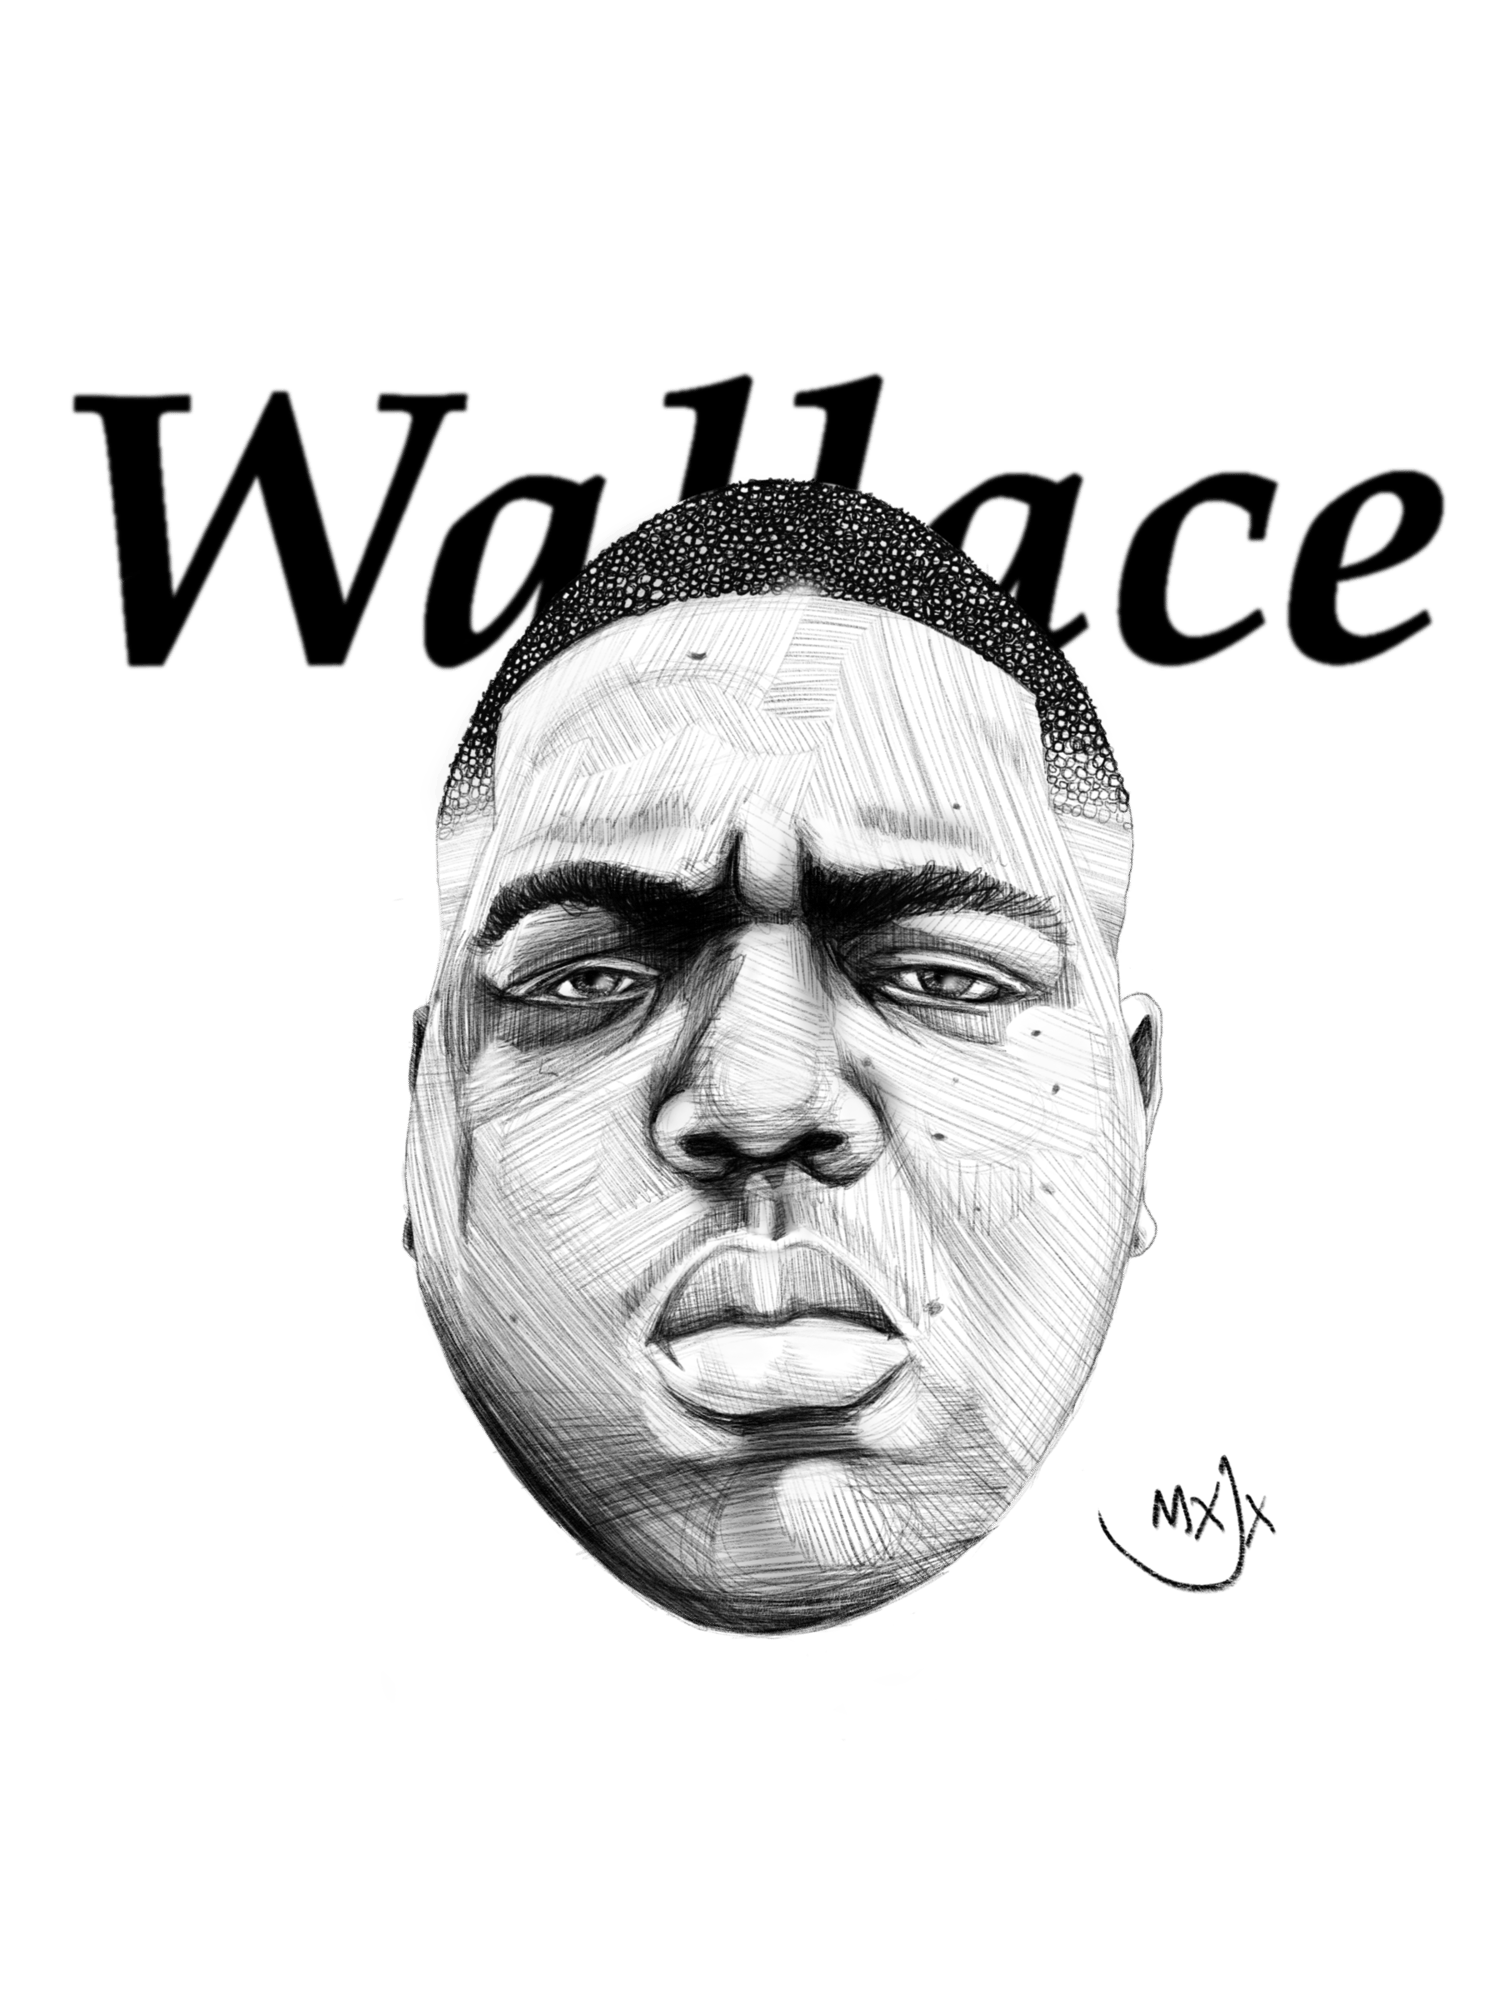 Image of Wallace-T shirt Men's white